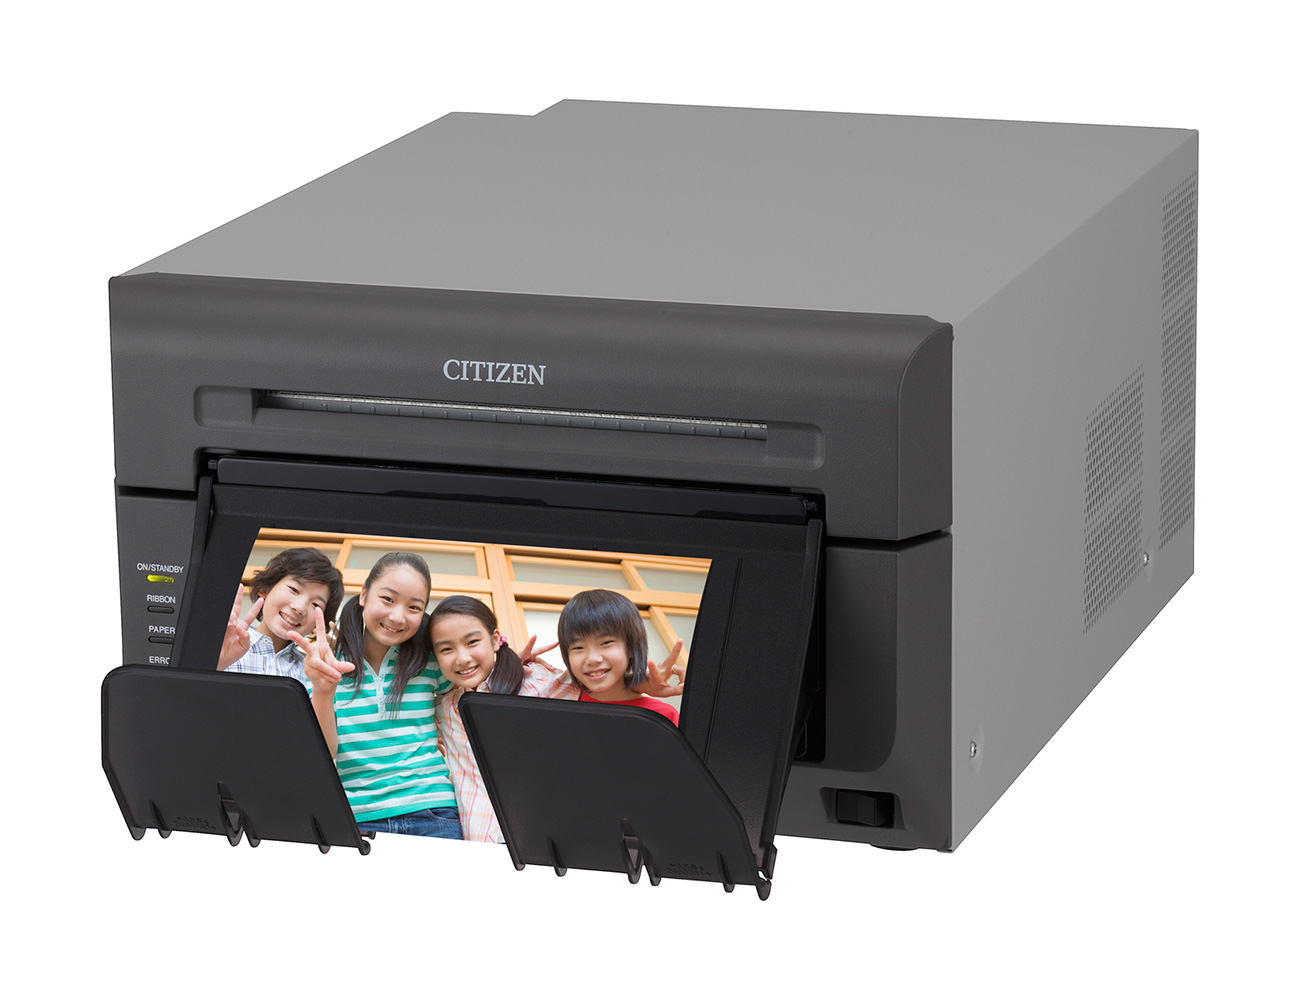 Citizen Thermal Photo printer